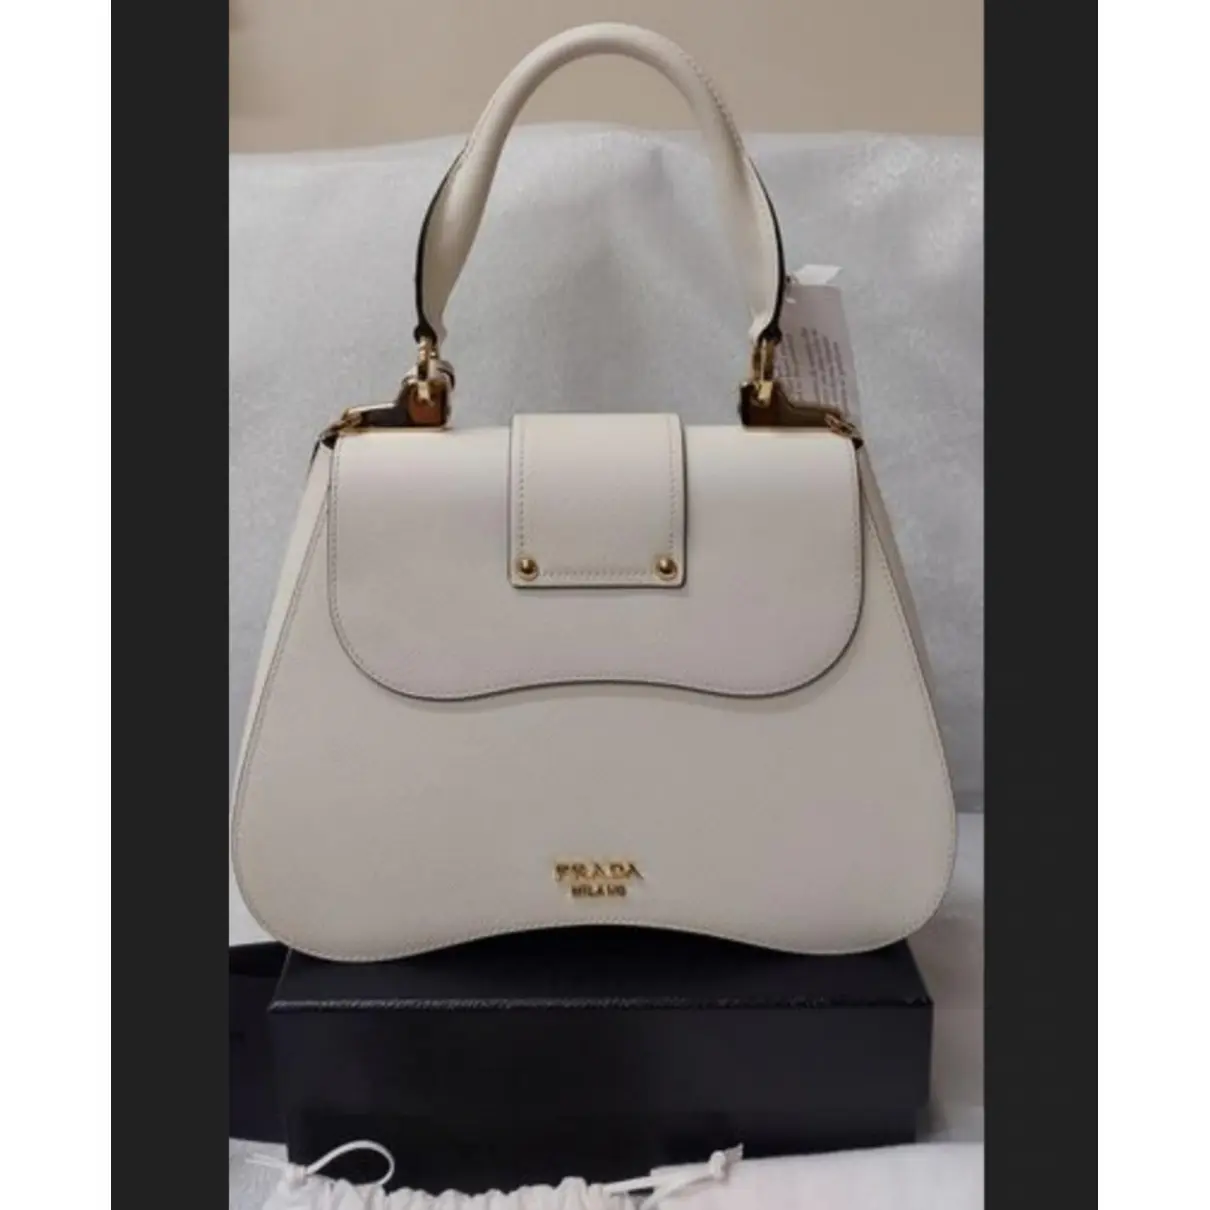 Buy Prada Sidonie leather handbag online